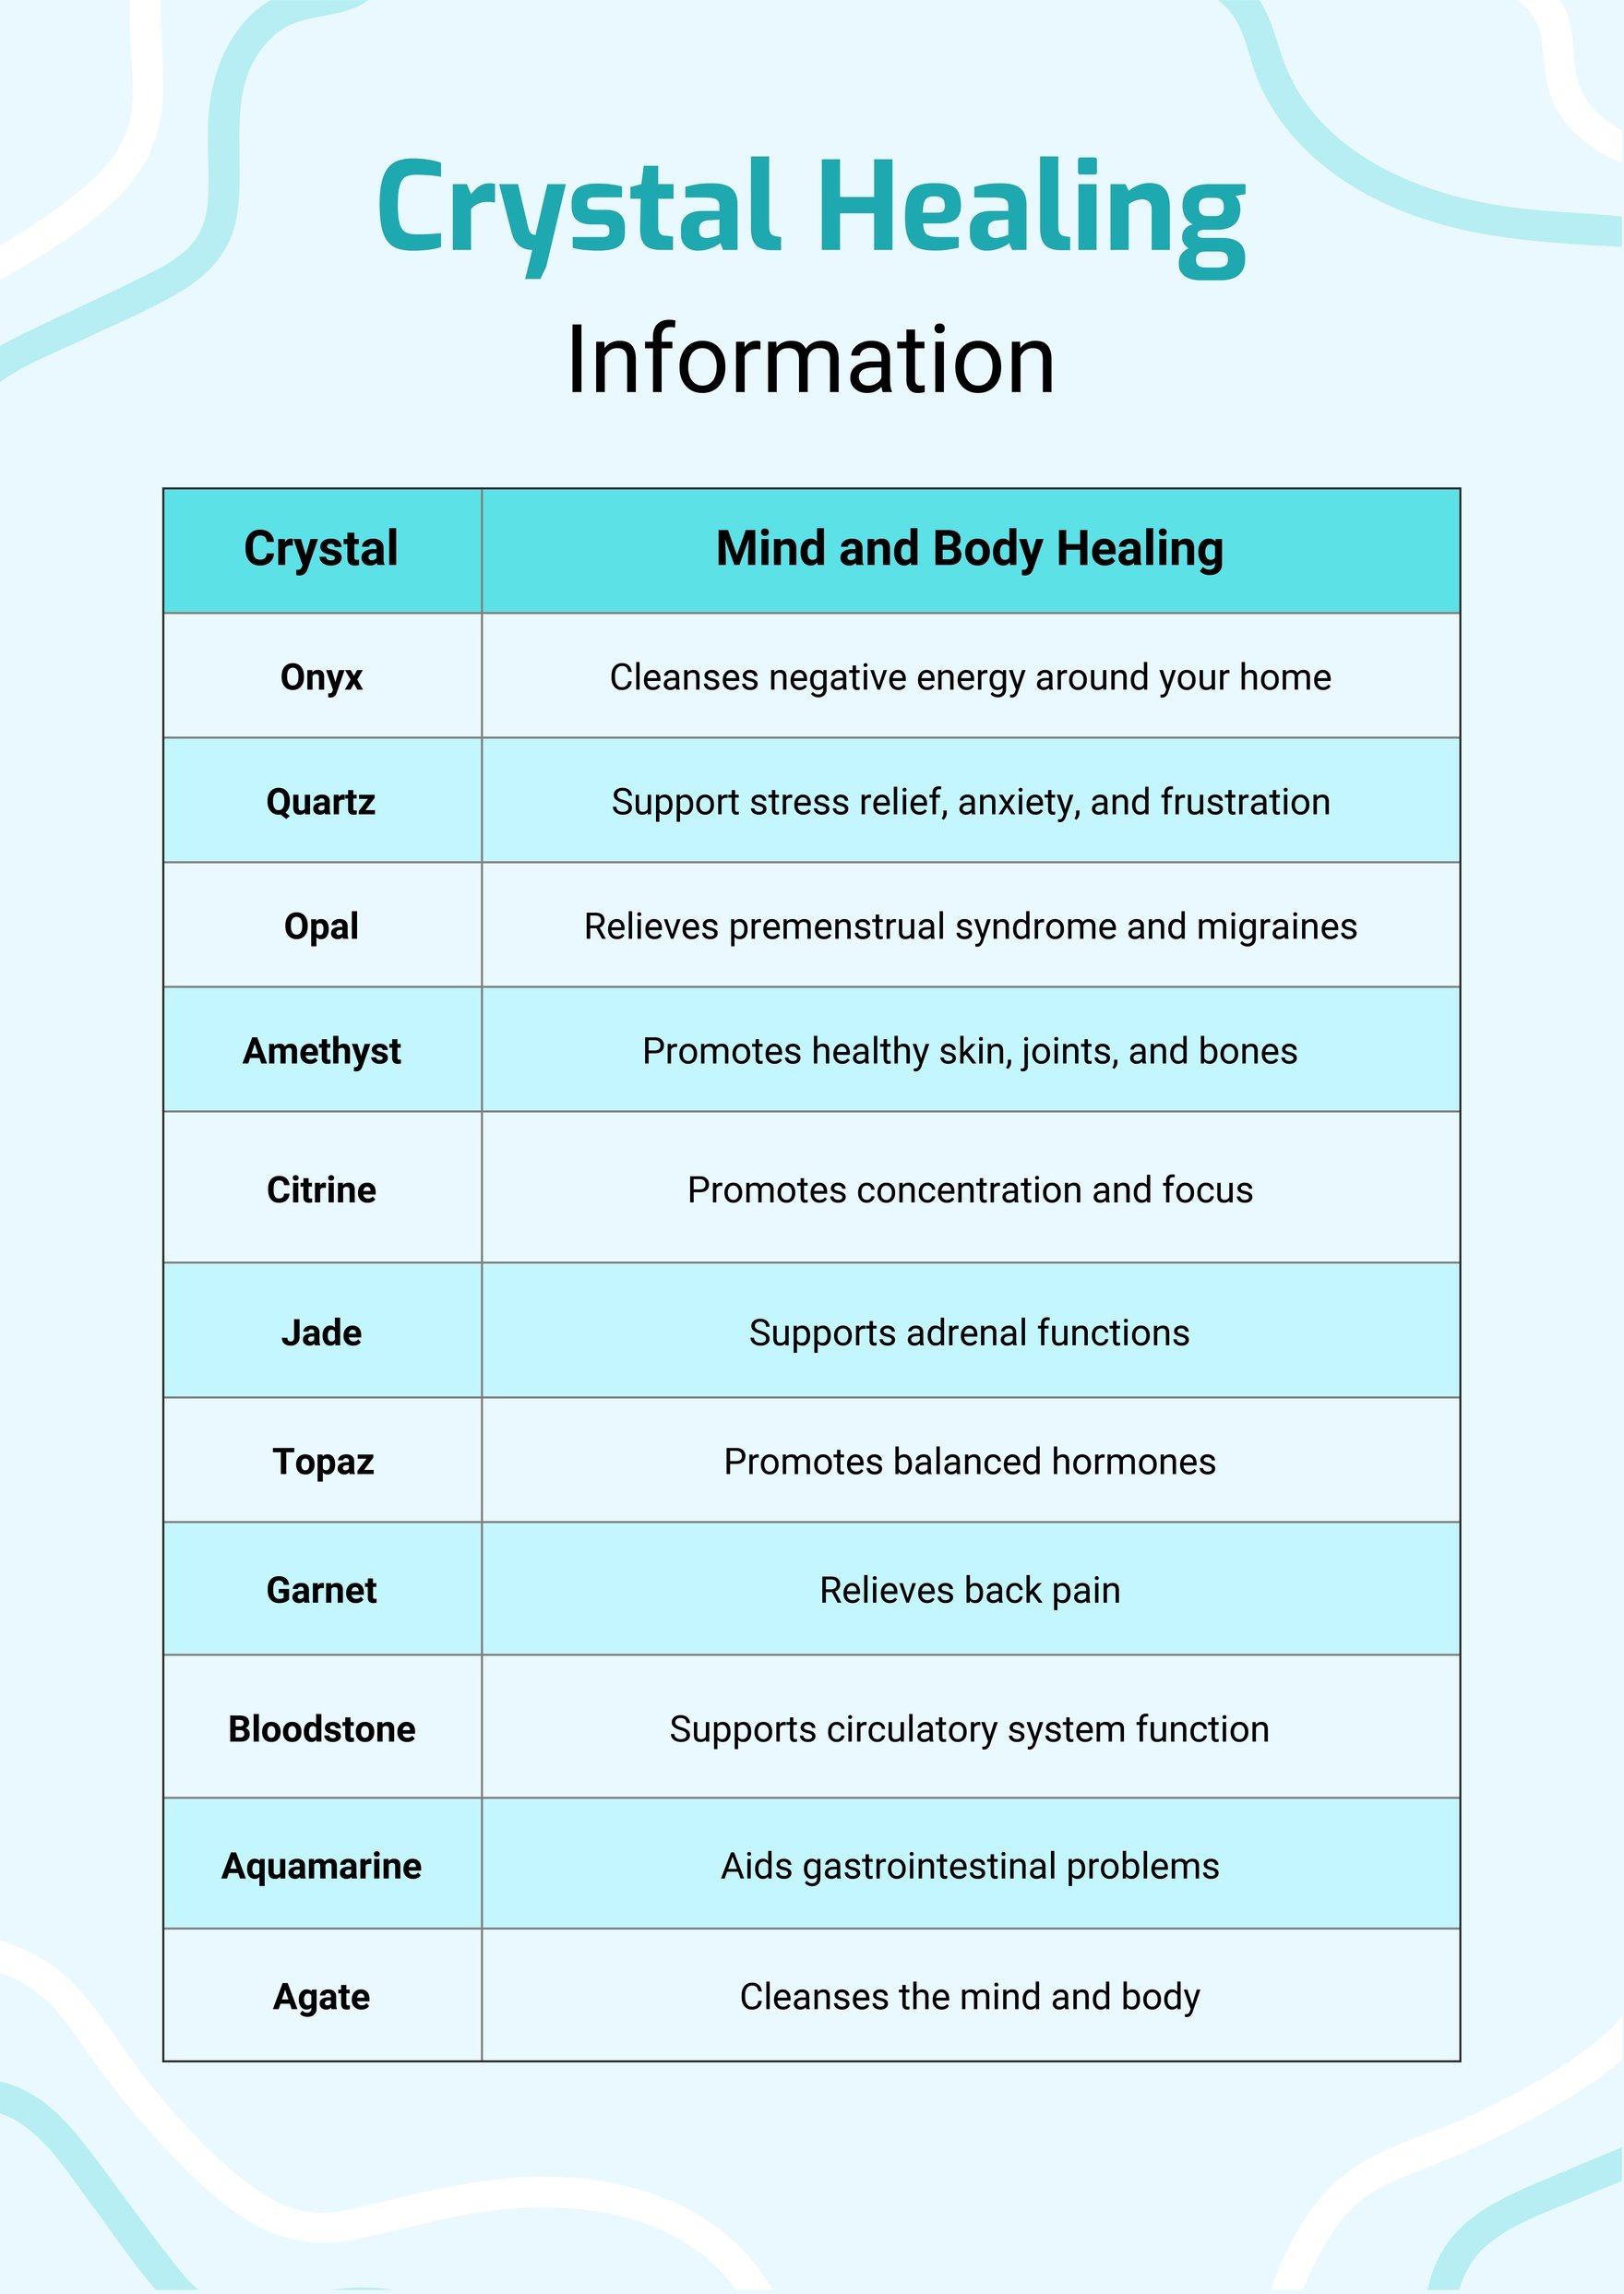 Crystal Healing Information Chart in PDF, Illustrator